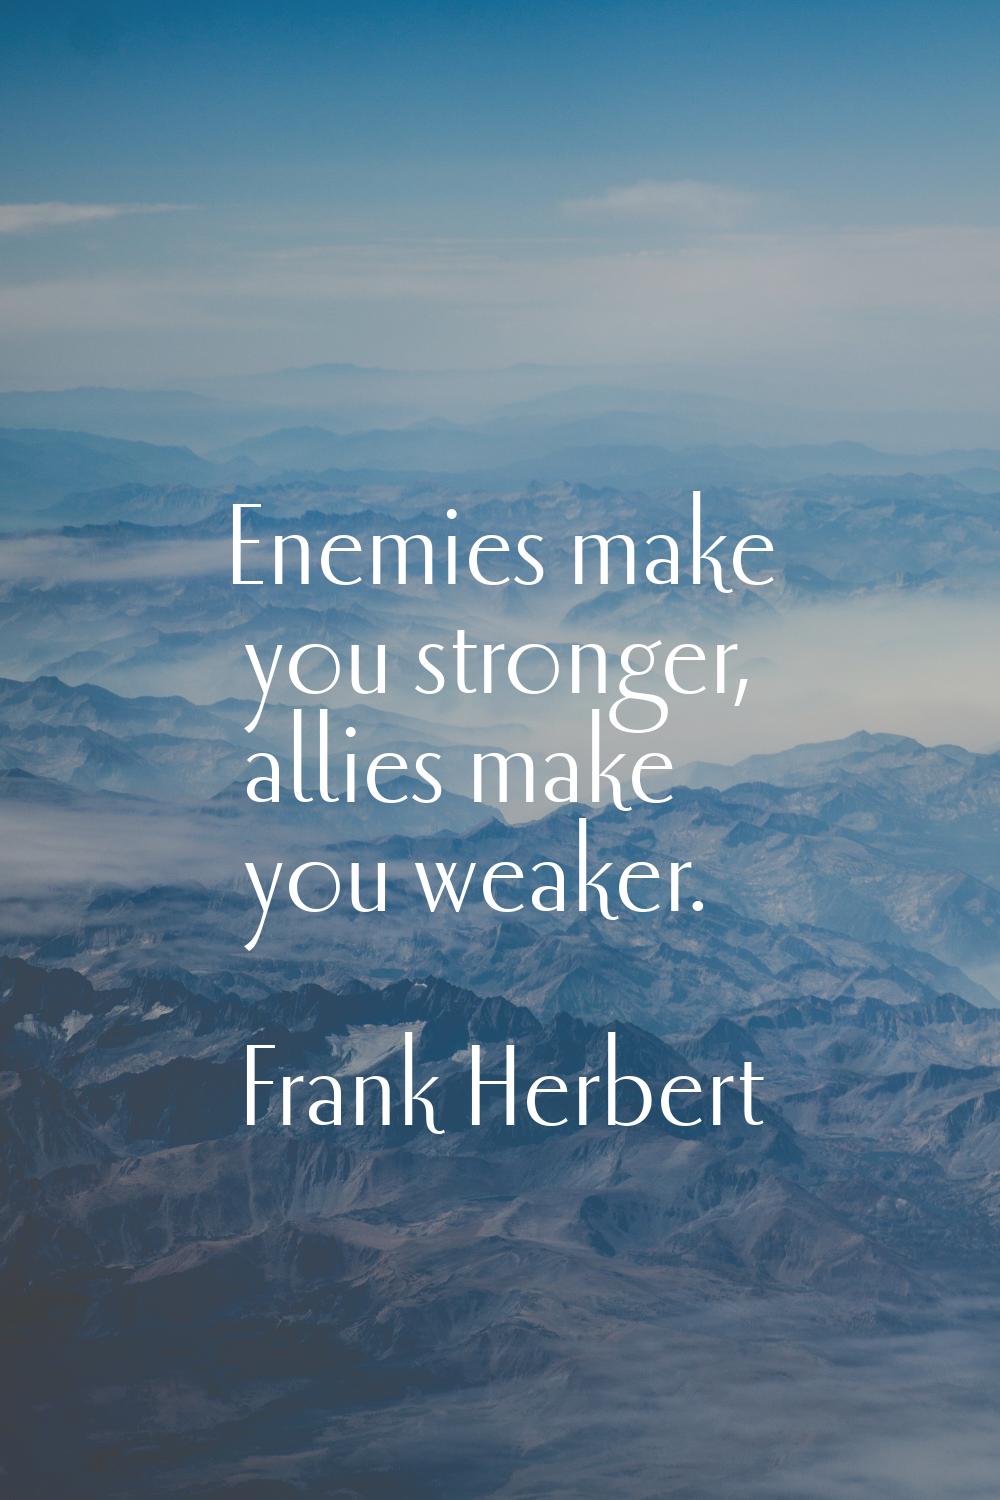 Enemies make you stronger, allies make you weaker.